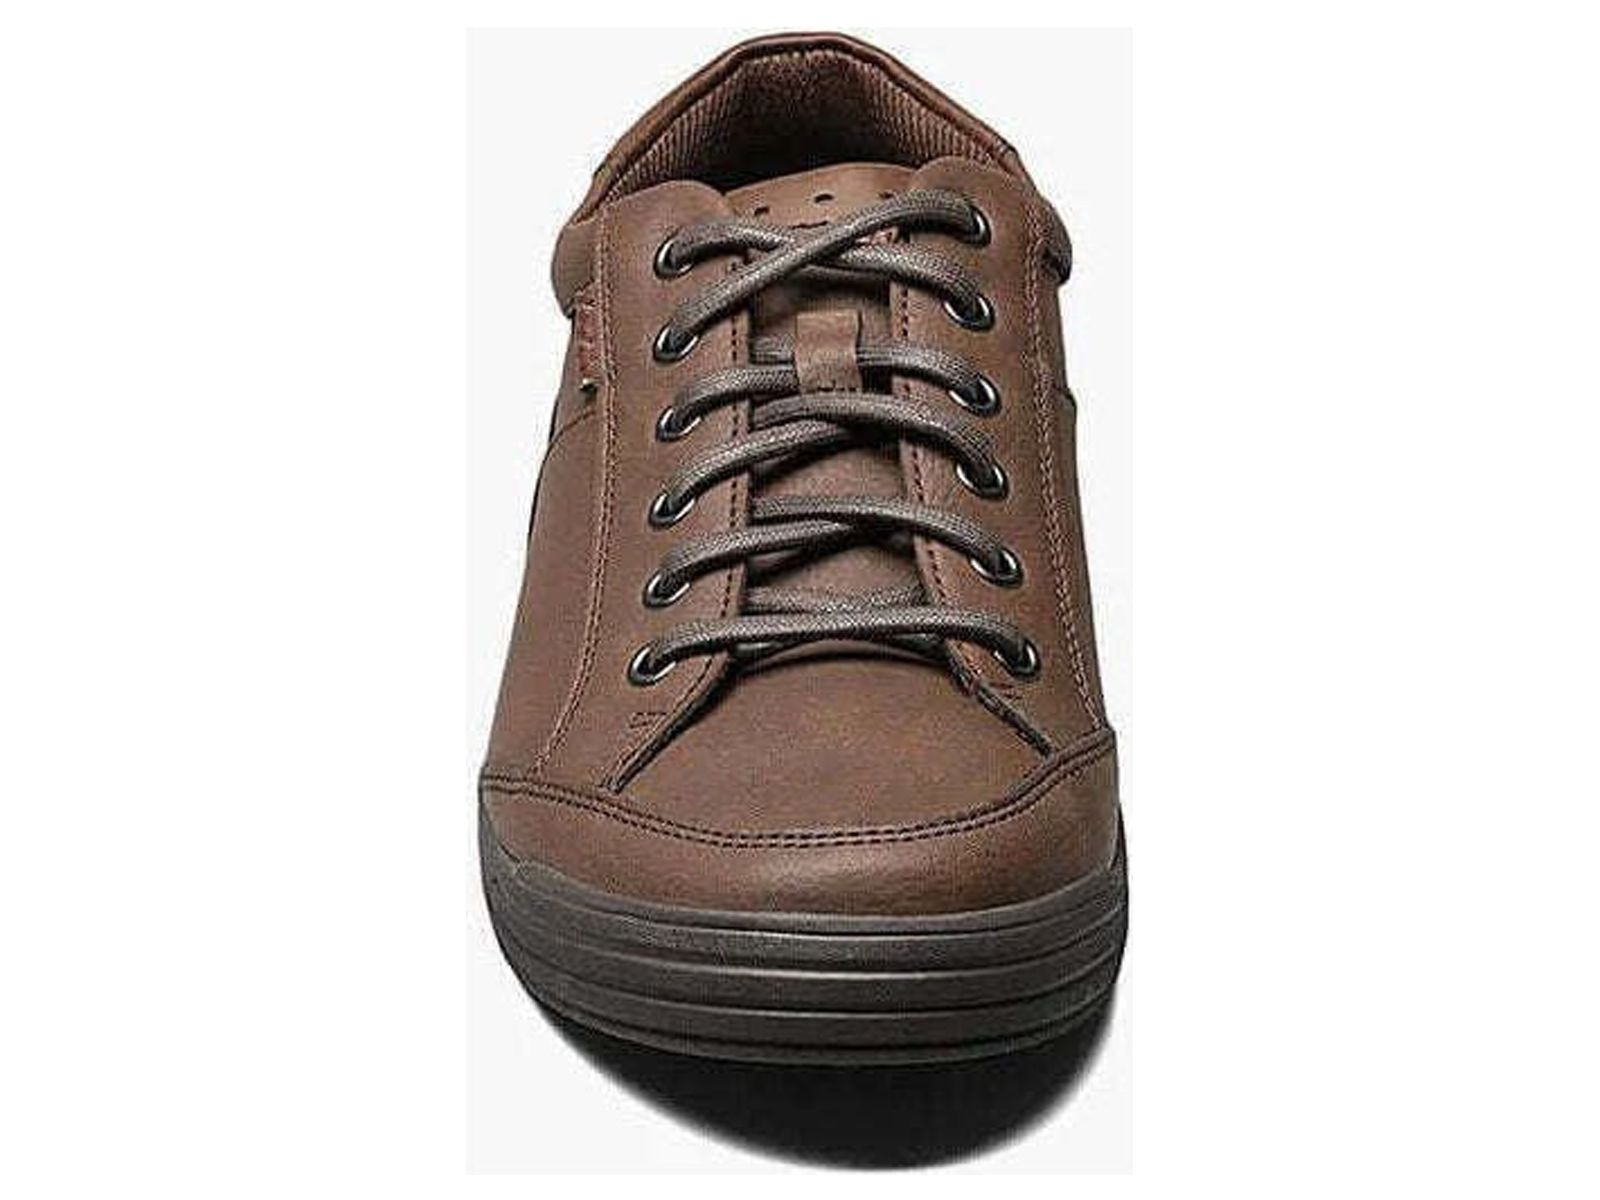 Nunn Bush KORE City Walk Lace To Toe Oxford Walking Sneaker Dark Brown 84819-201 - image 3 of 9